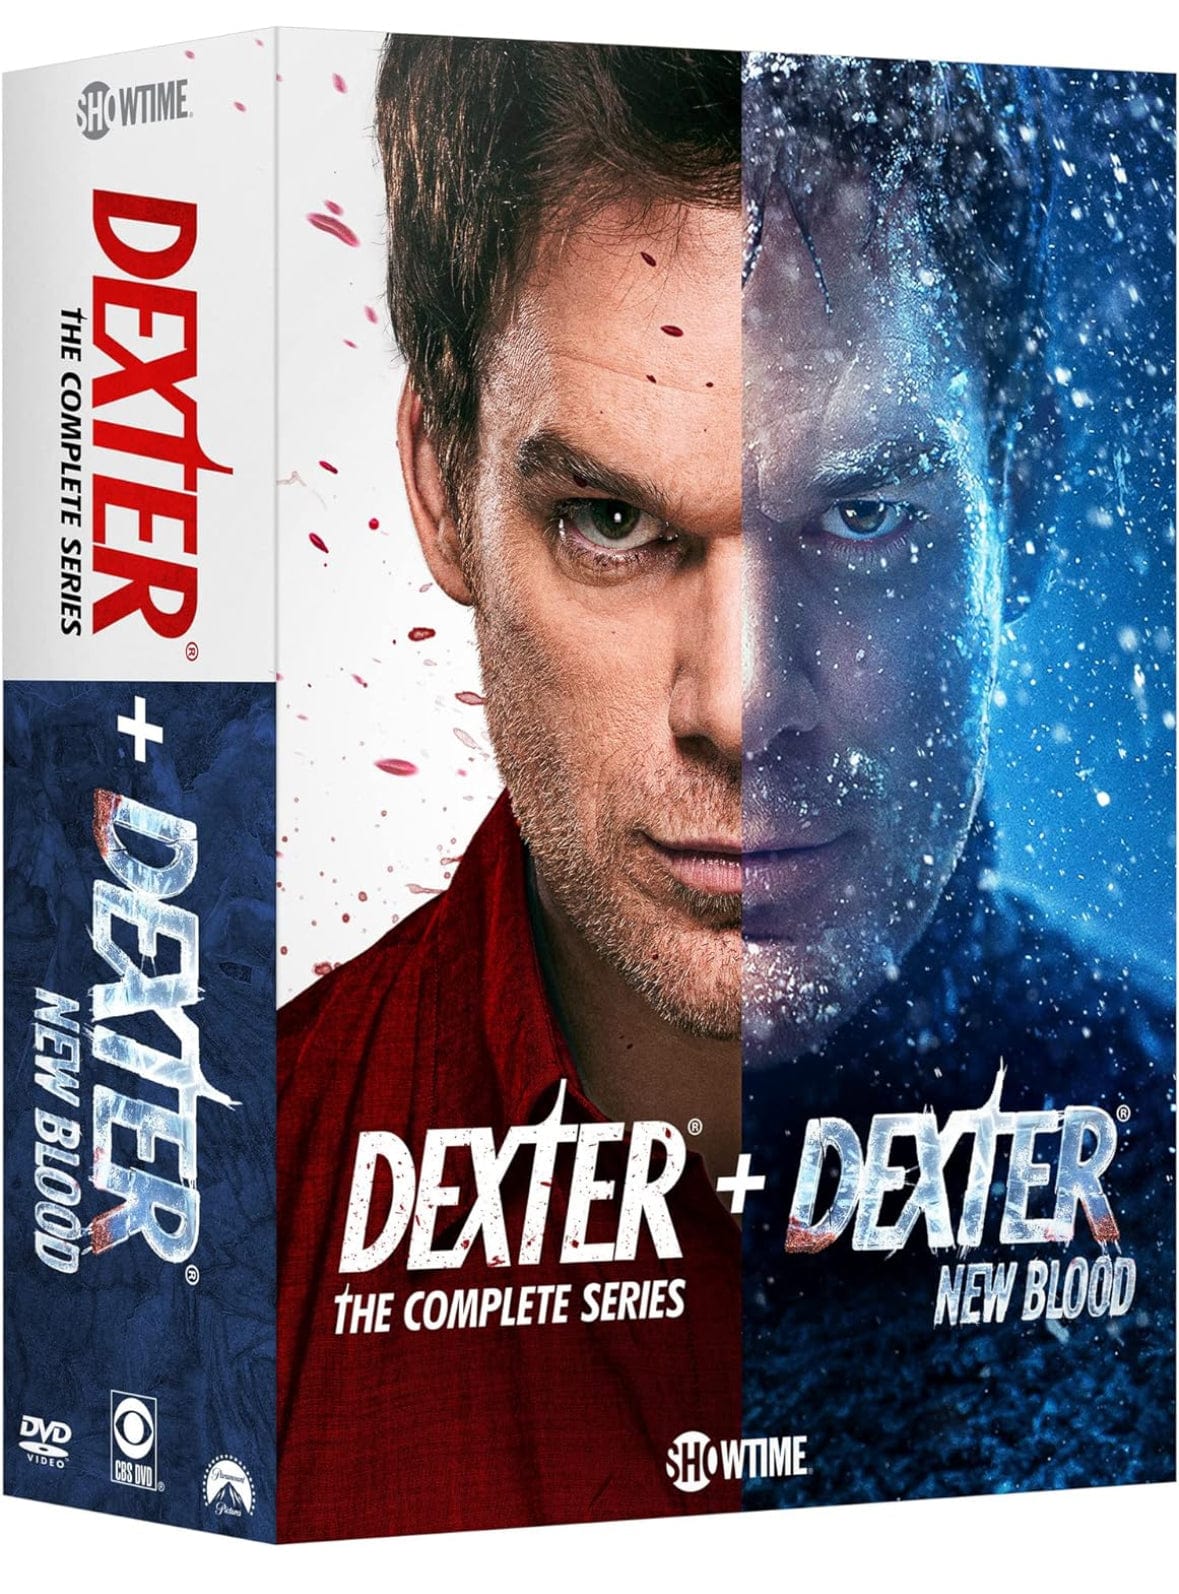 Dexter DVD Complete Series Box Set plus New Blood! Paramount Home Entertainment DVDs & Blu-ray Discs > DVDs > Box Sets